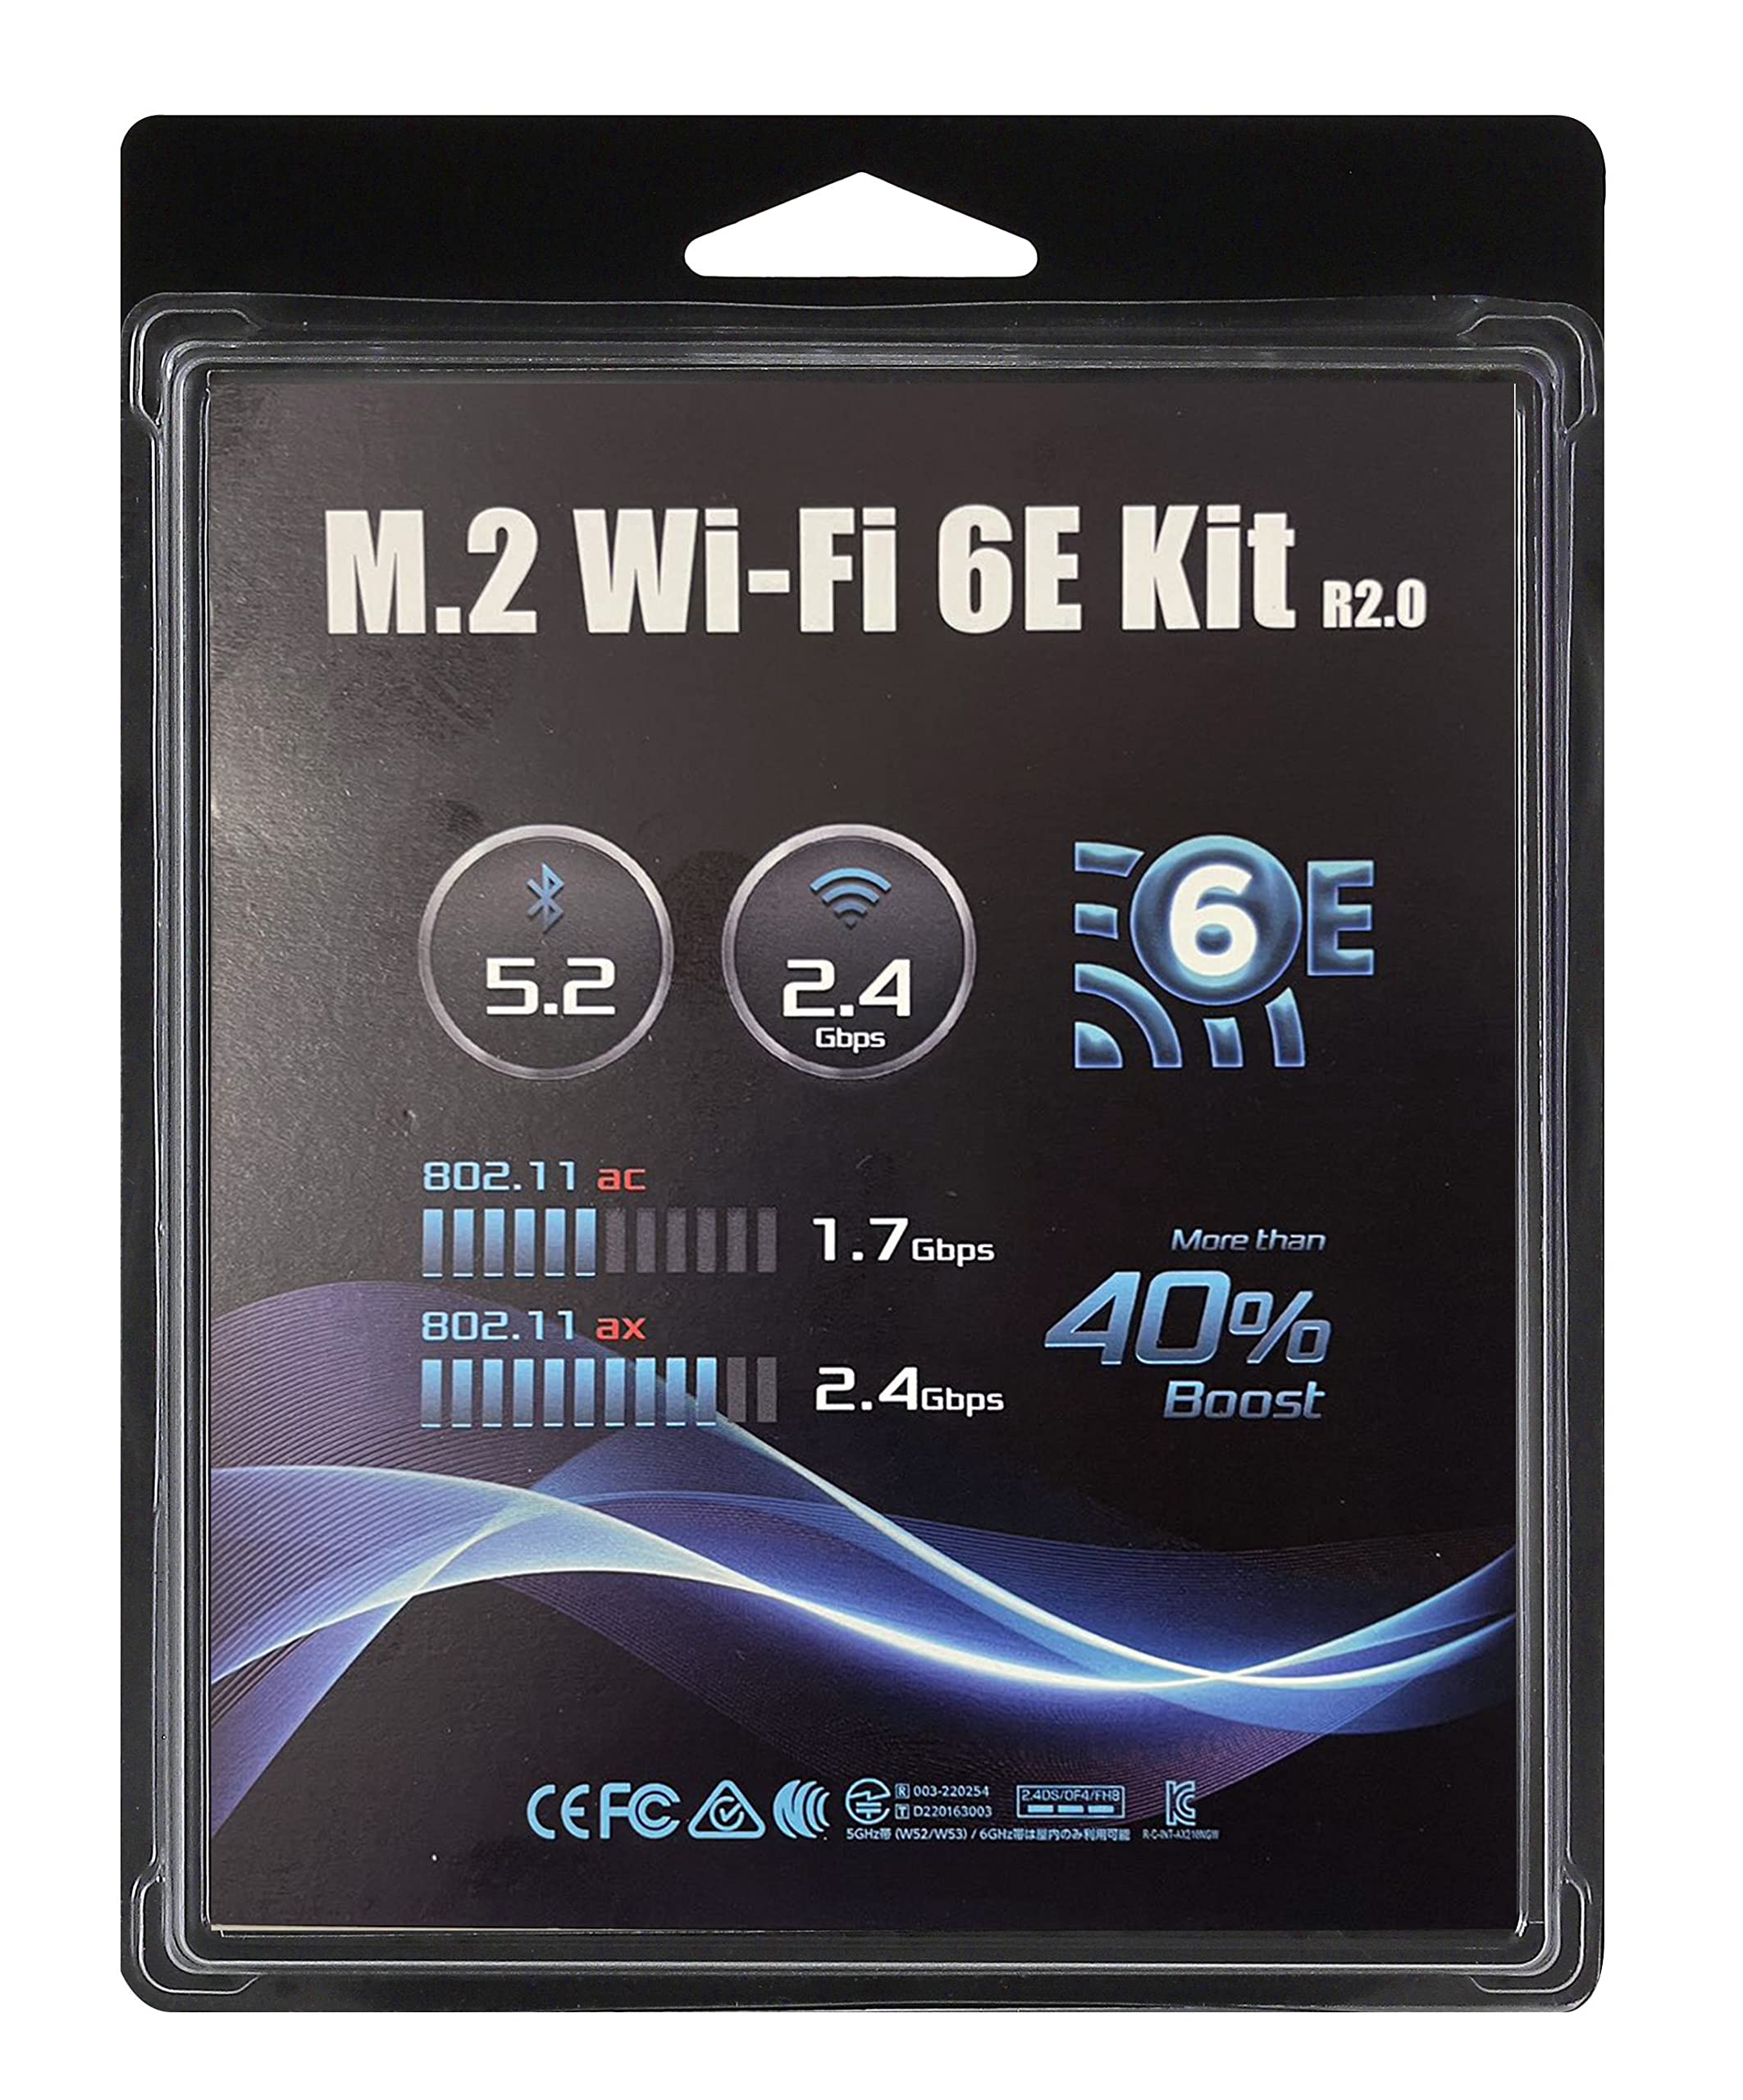 ・ M.2WIFI6Ekit (AX210) DeskM R2.0・Intel WiFi 6E AX210 Module とアンテナ・ケーブルのセット・ASRockDesk Mini シリーズに最新 WIFI 環境を追加できます。説明 Dimensions (H x W x D) M.2 2230: 22mm x 30mm x 2.4mm [1.5mm Max (Top Side)/0.1mm Max (BottomM.2 WIFI 6E kit (AX210